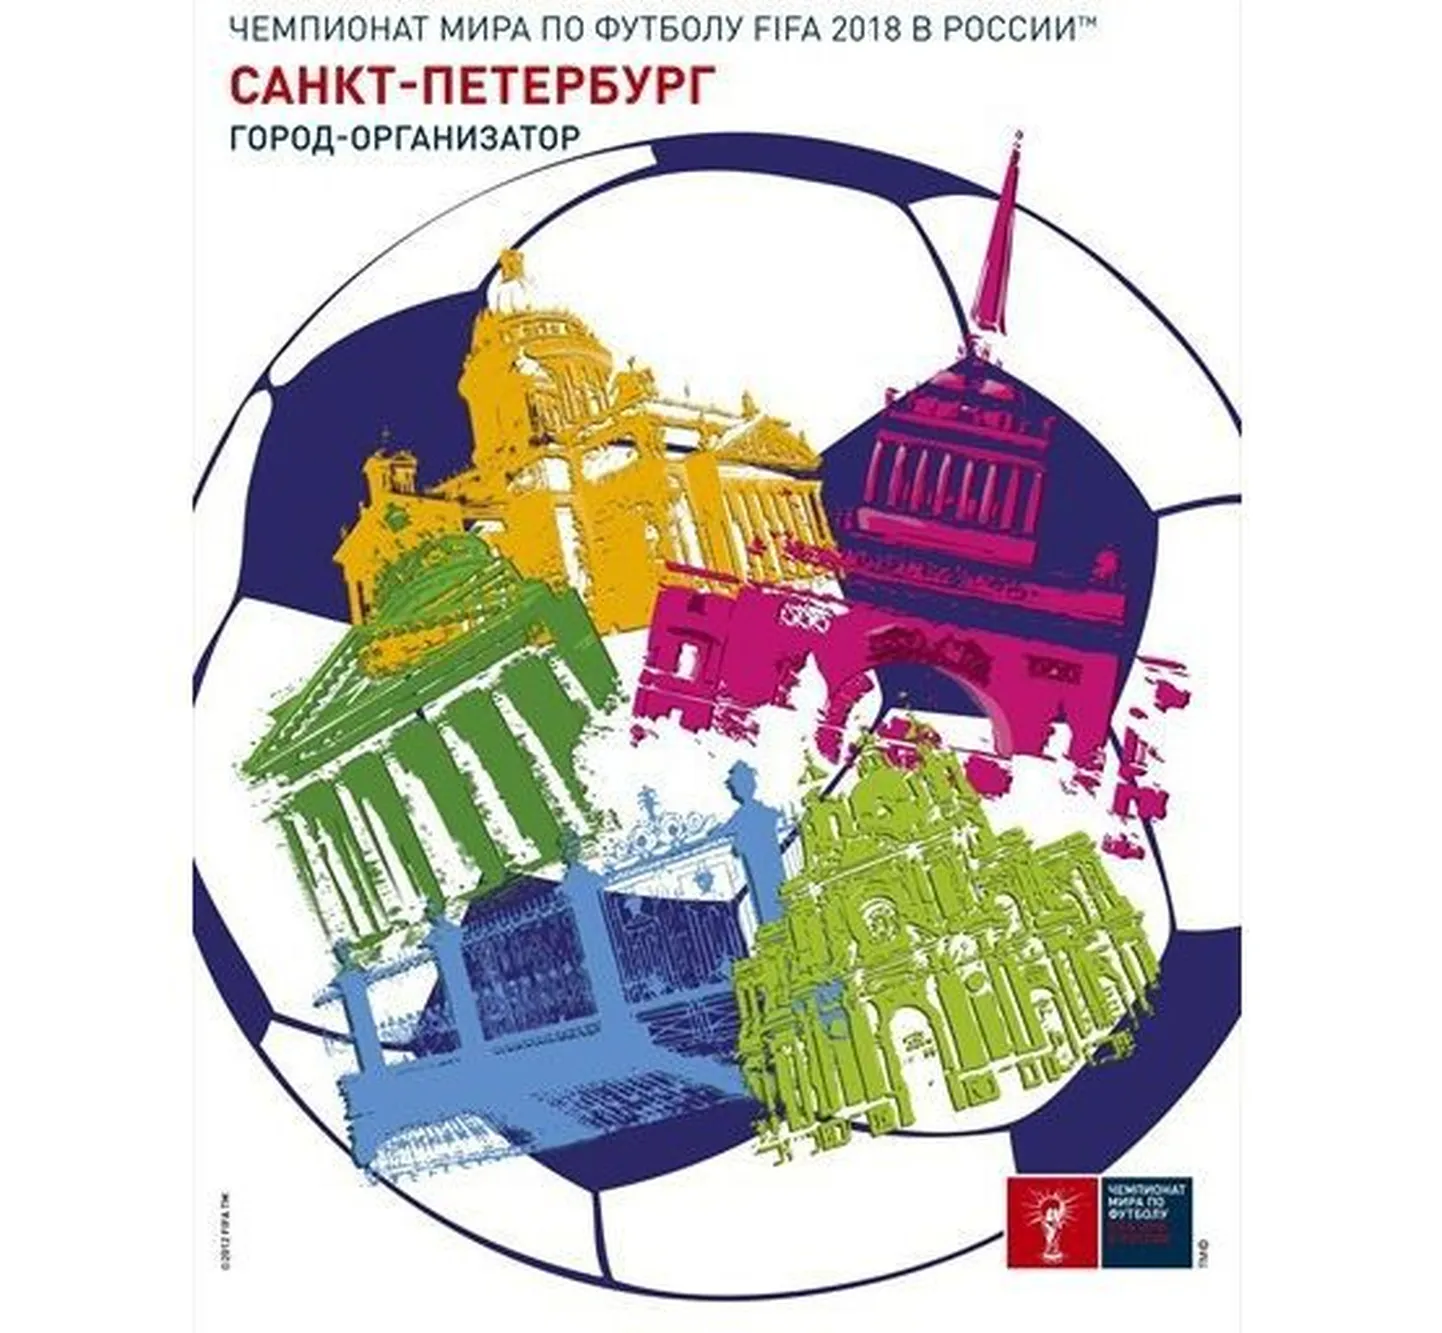 Плакат Санкт-Петербурга как города-организатора ЧМ-2018.